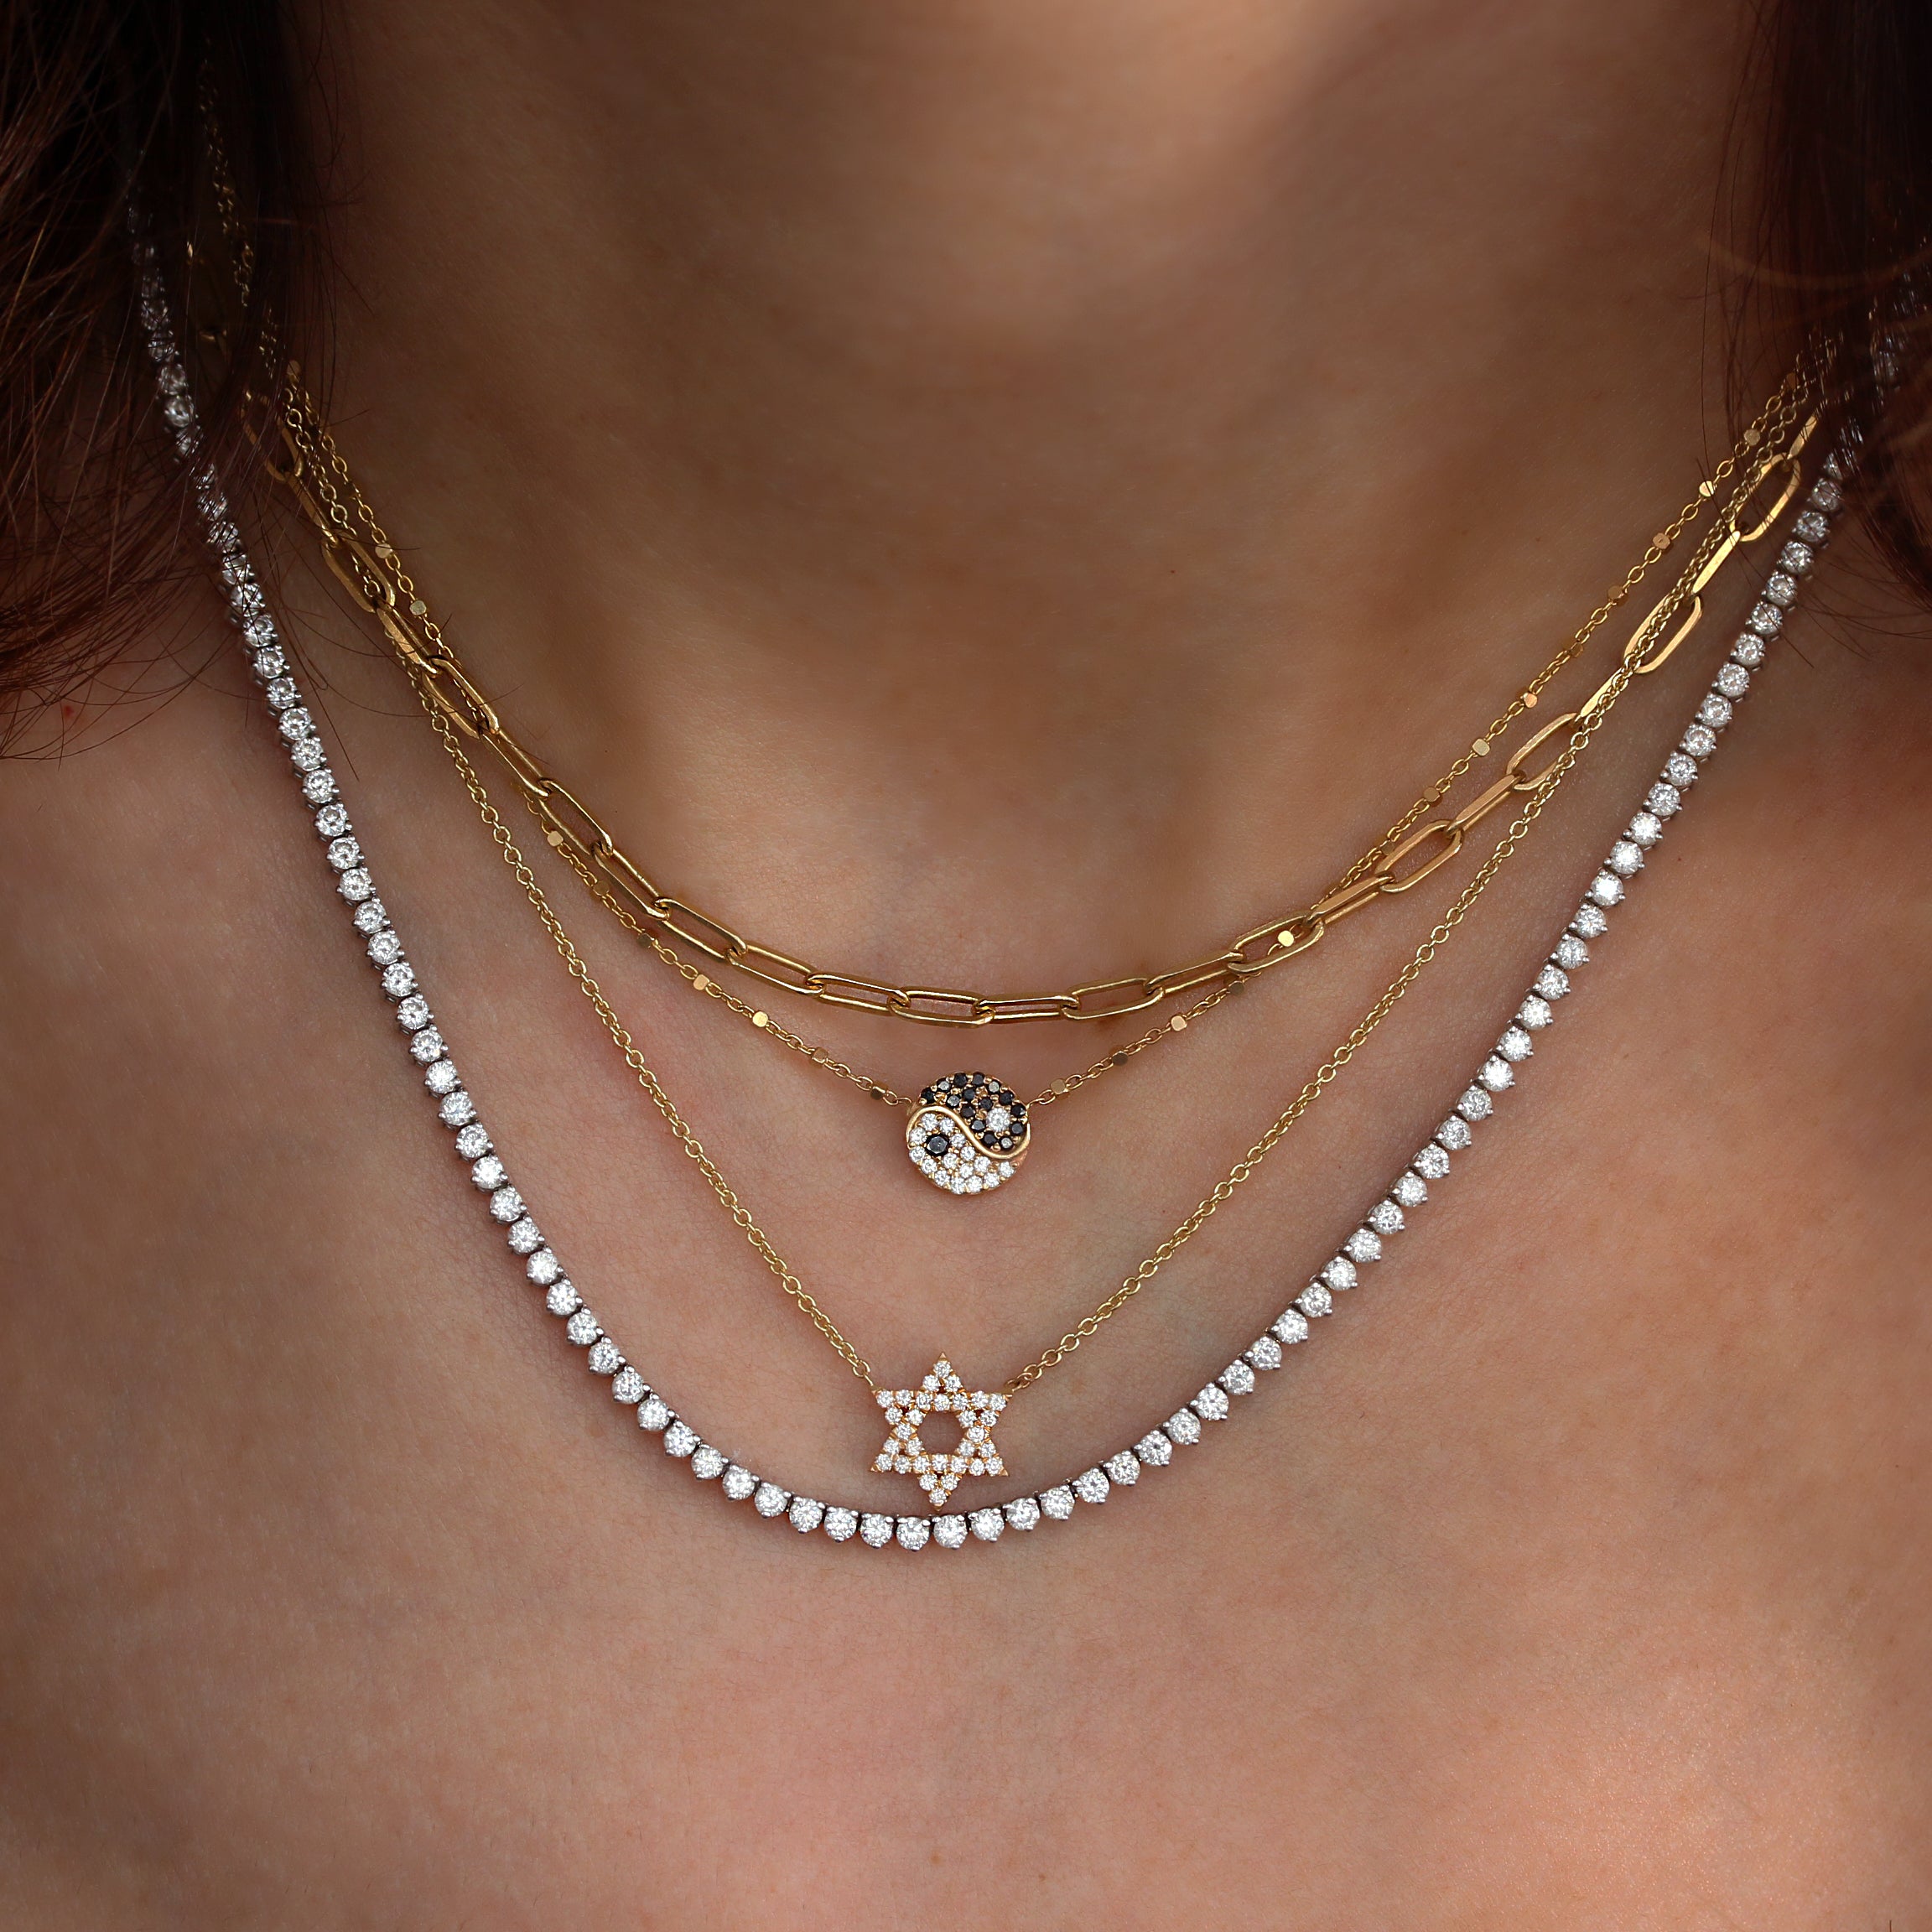 10mm Small Star of David Diamond Pendant Gold Necklace ♥